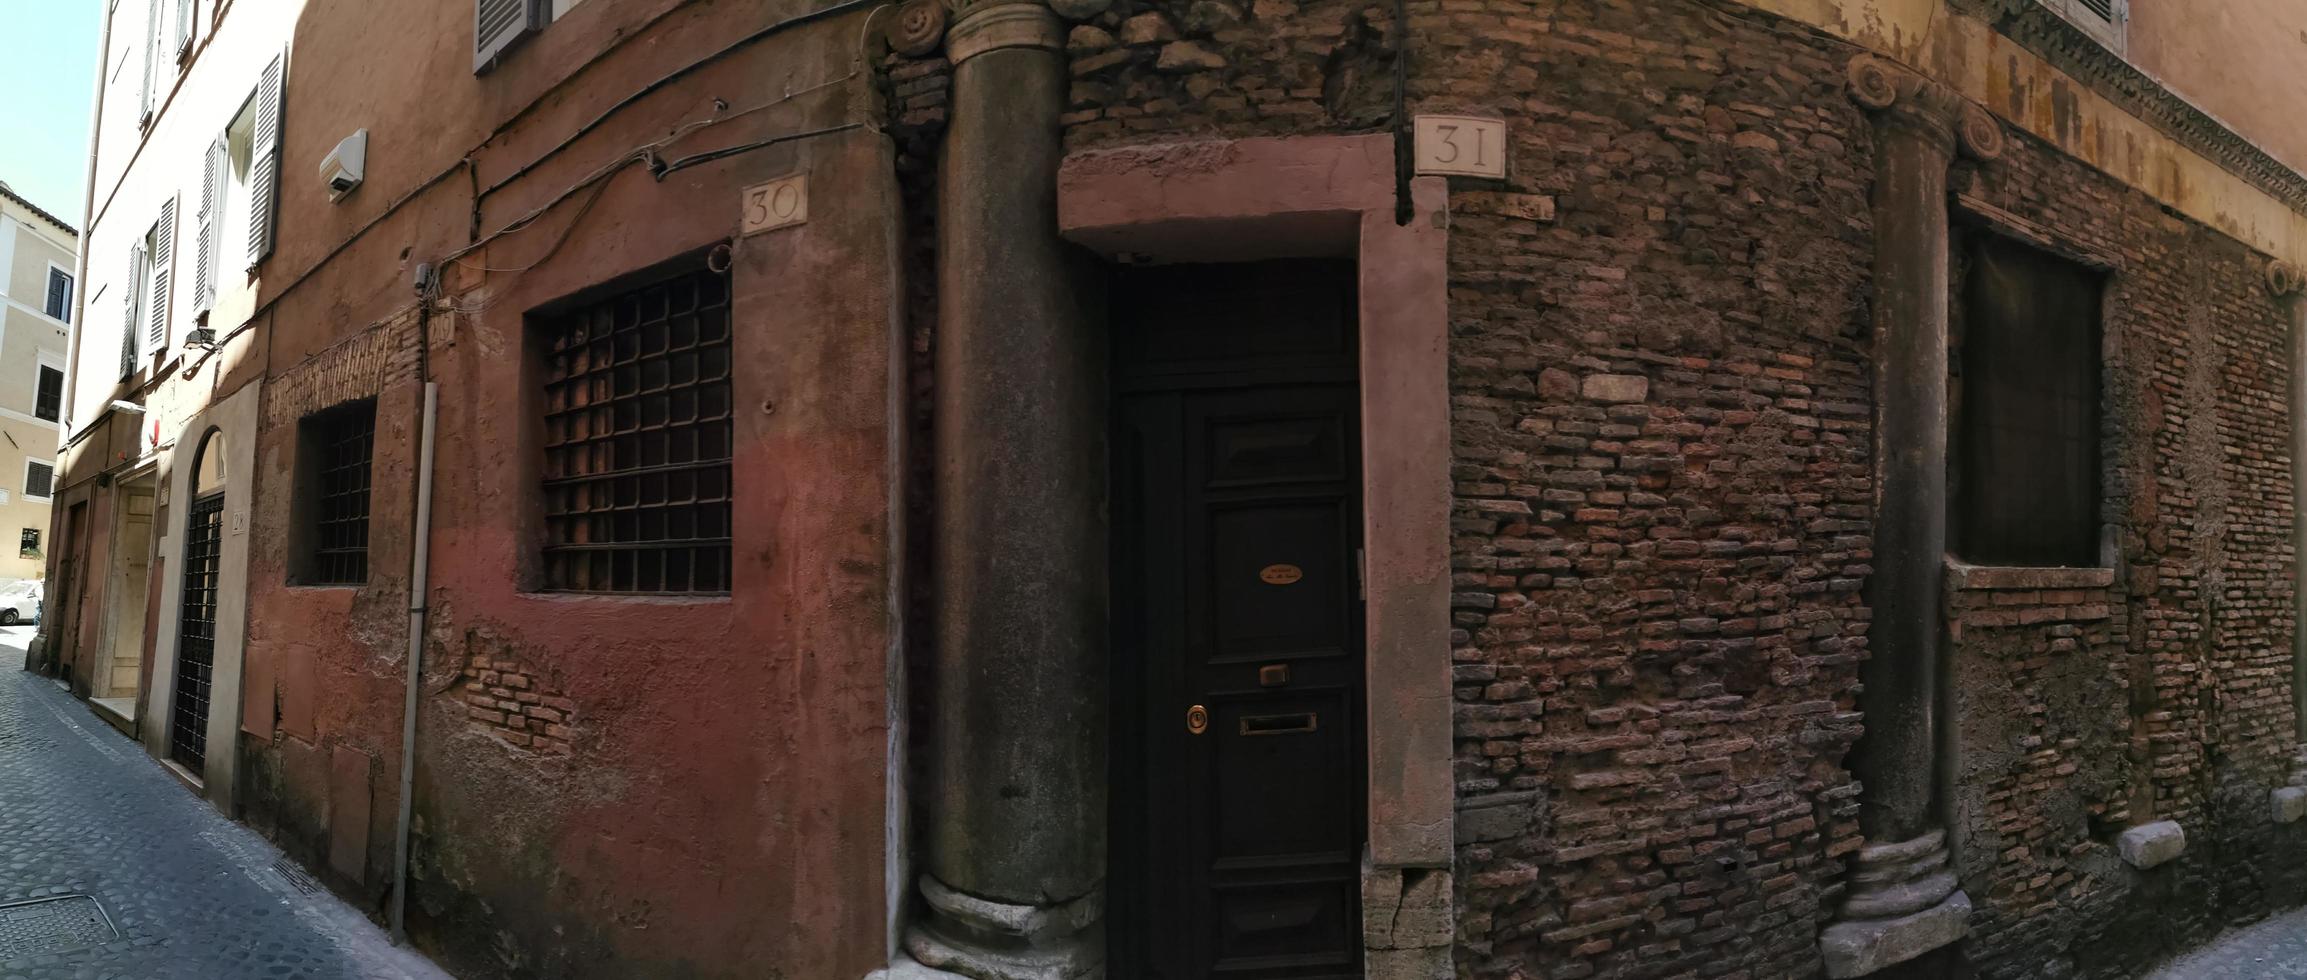 Roma, Italia - 16 de junio de 2019 - antiguas columnas romanas dentro de un edificio medieval en Roma foto